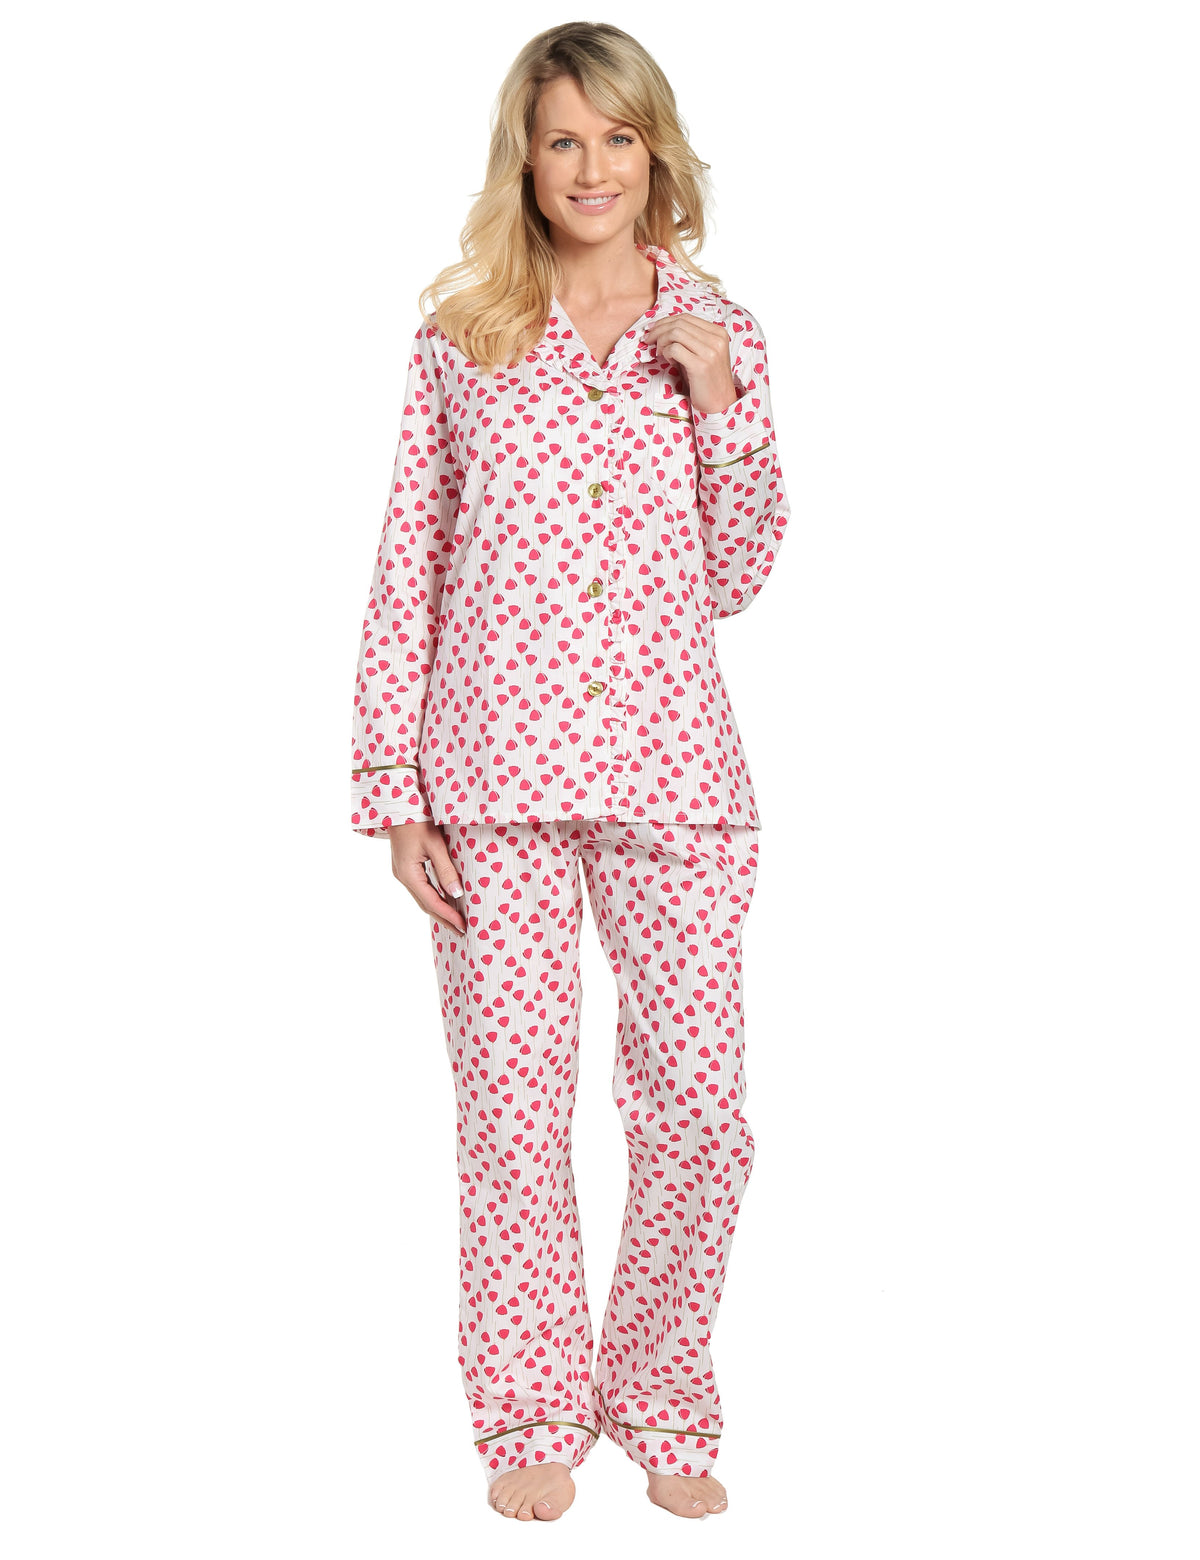 Womens Premium 100% Cotton Poplin Pajama Set with Ruffles - Poppies Red-White